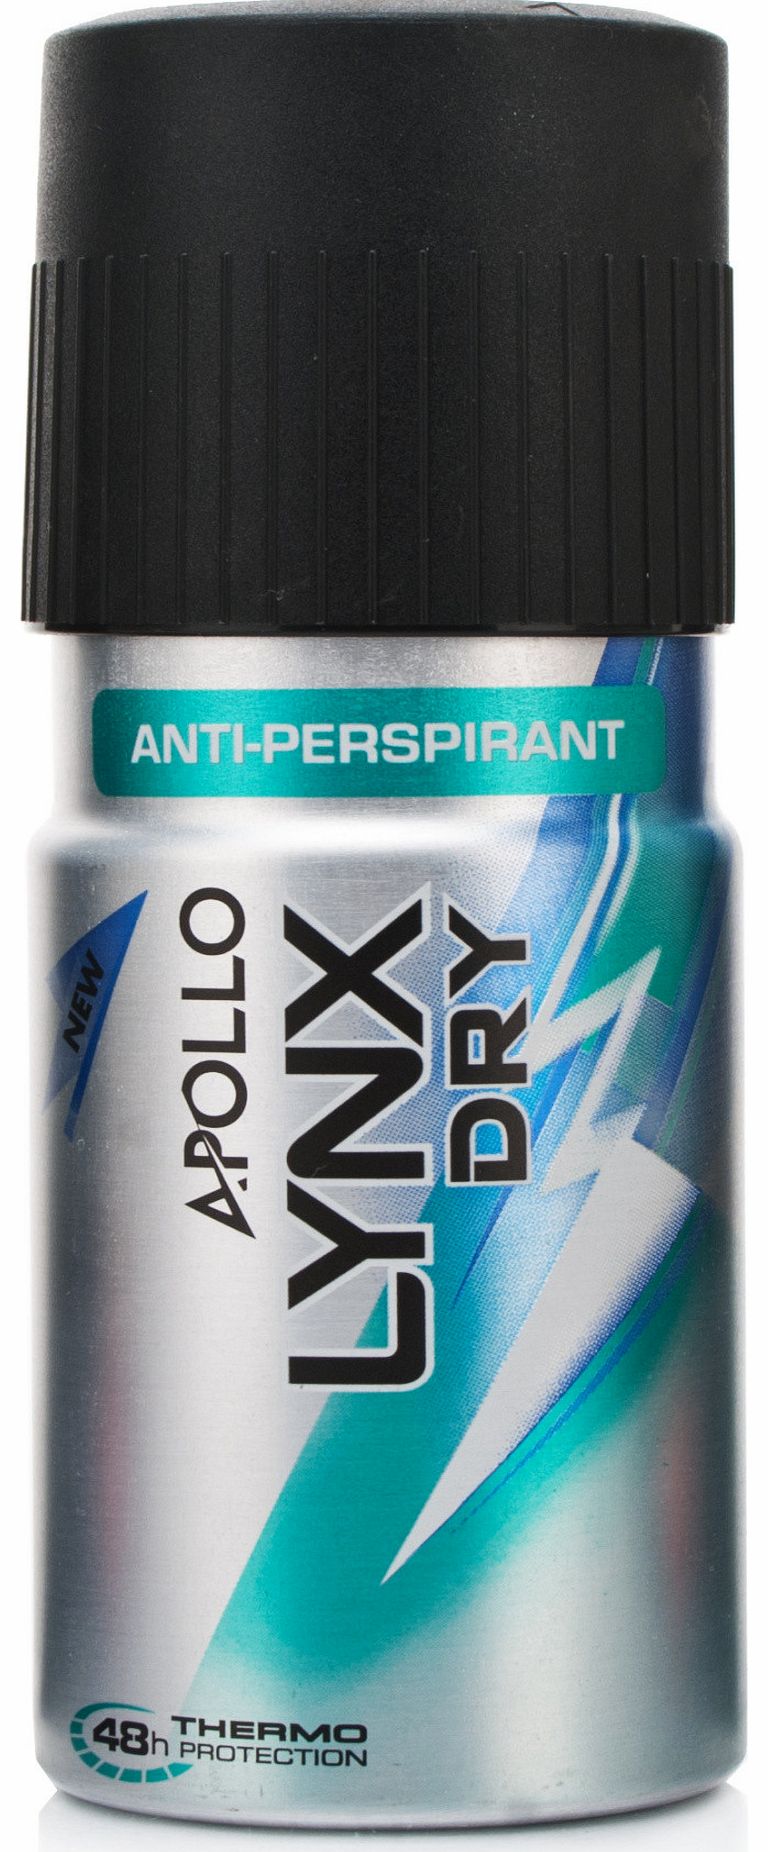 Dry Apollo Anti-Perspirant Deodorant